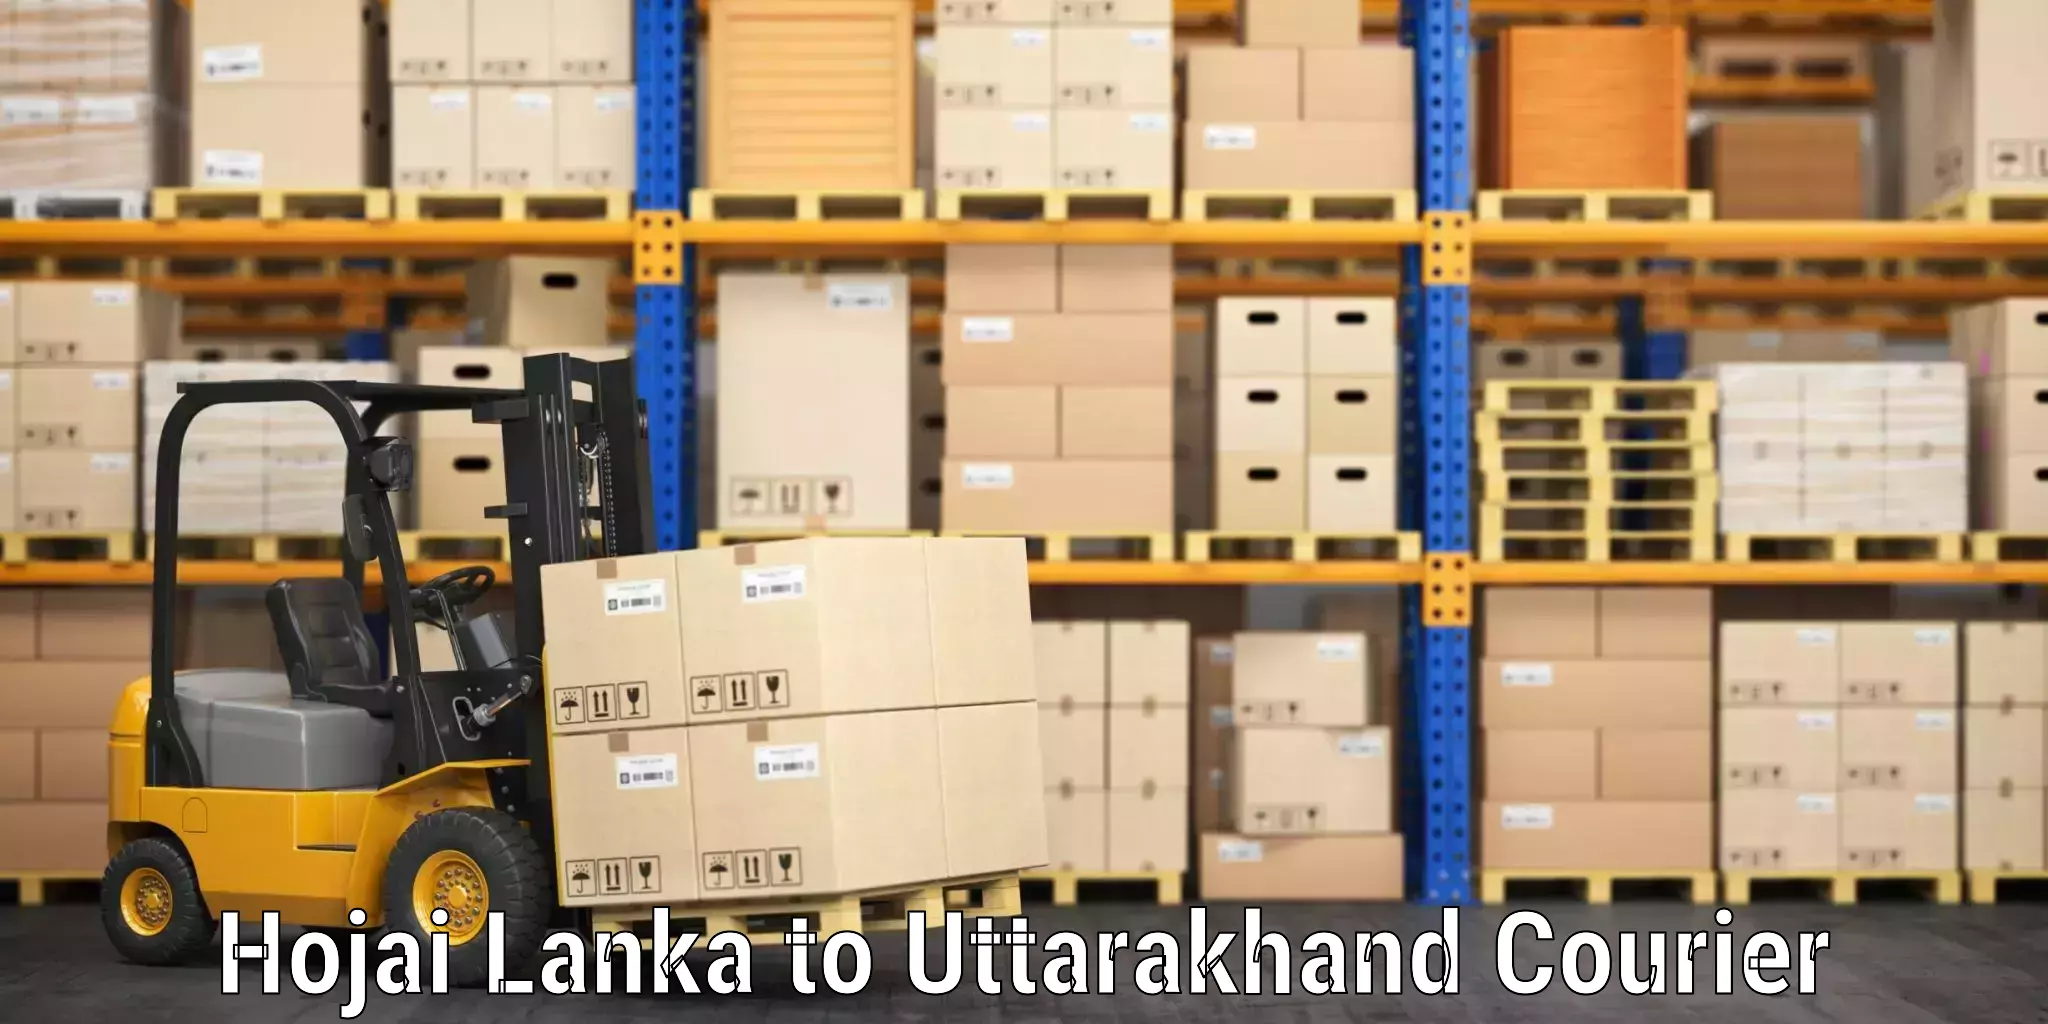 Hassle-free luggage shipping Hojai Lanka to Almora